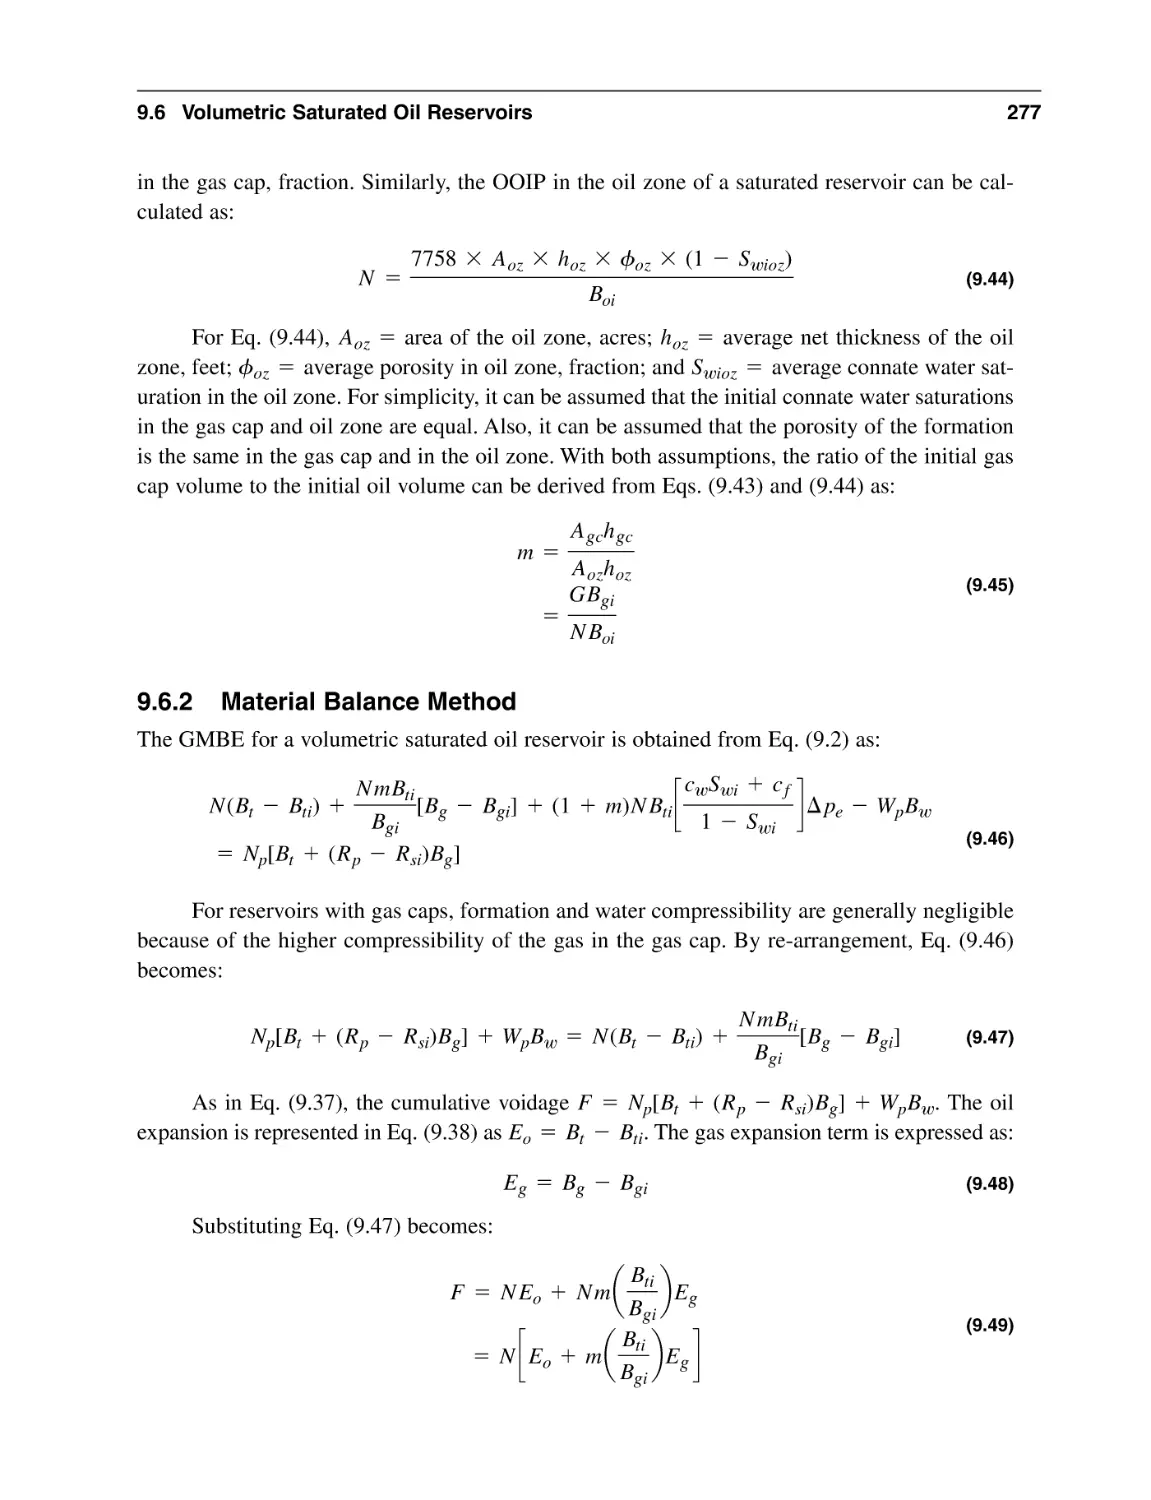 9.6.2 Material Balance Method